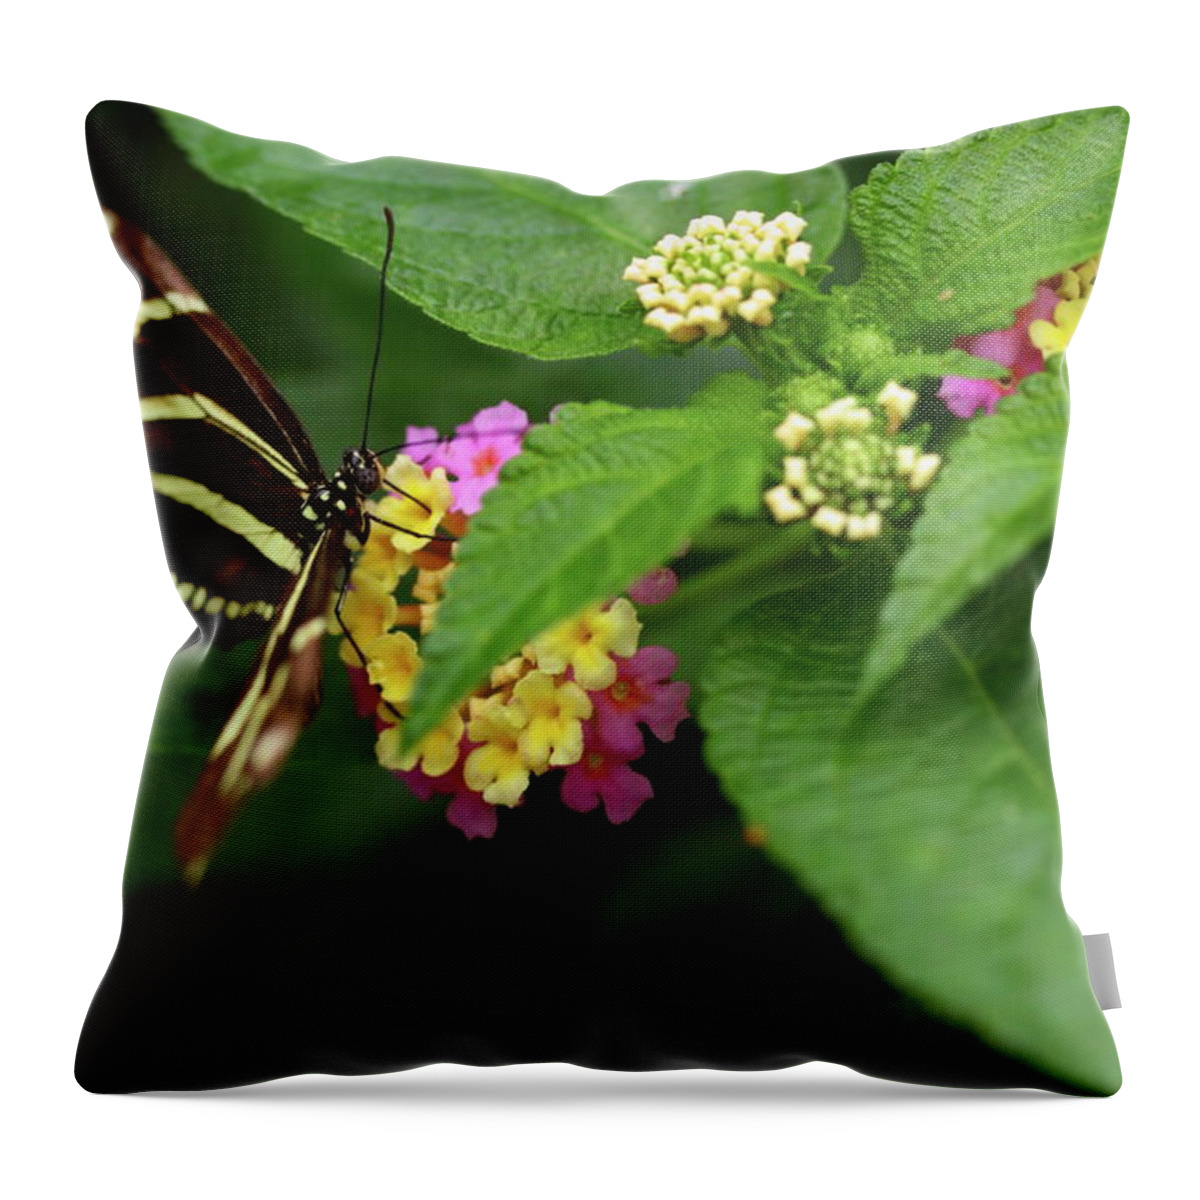 Butterfly Throw Pillow featuring the photograph Zebra Longwing by Rick Berk